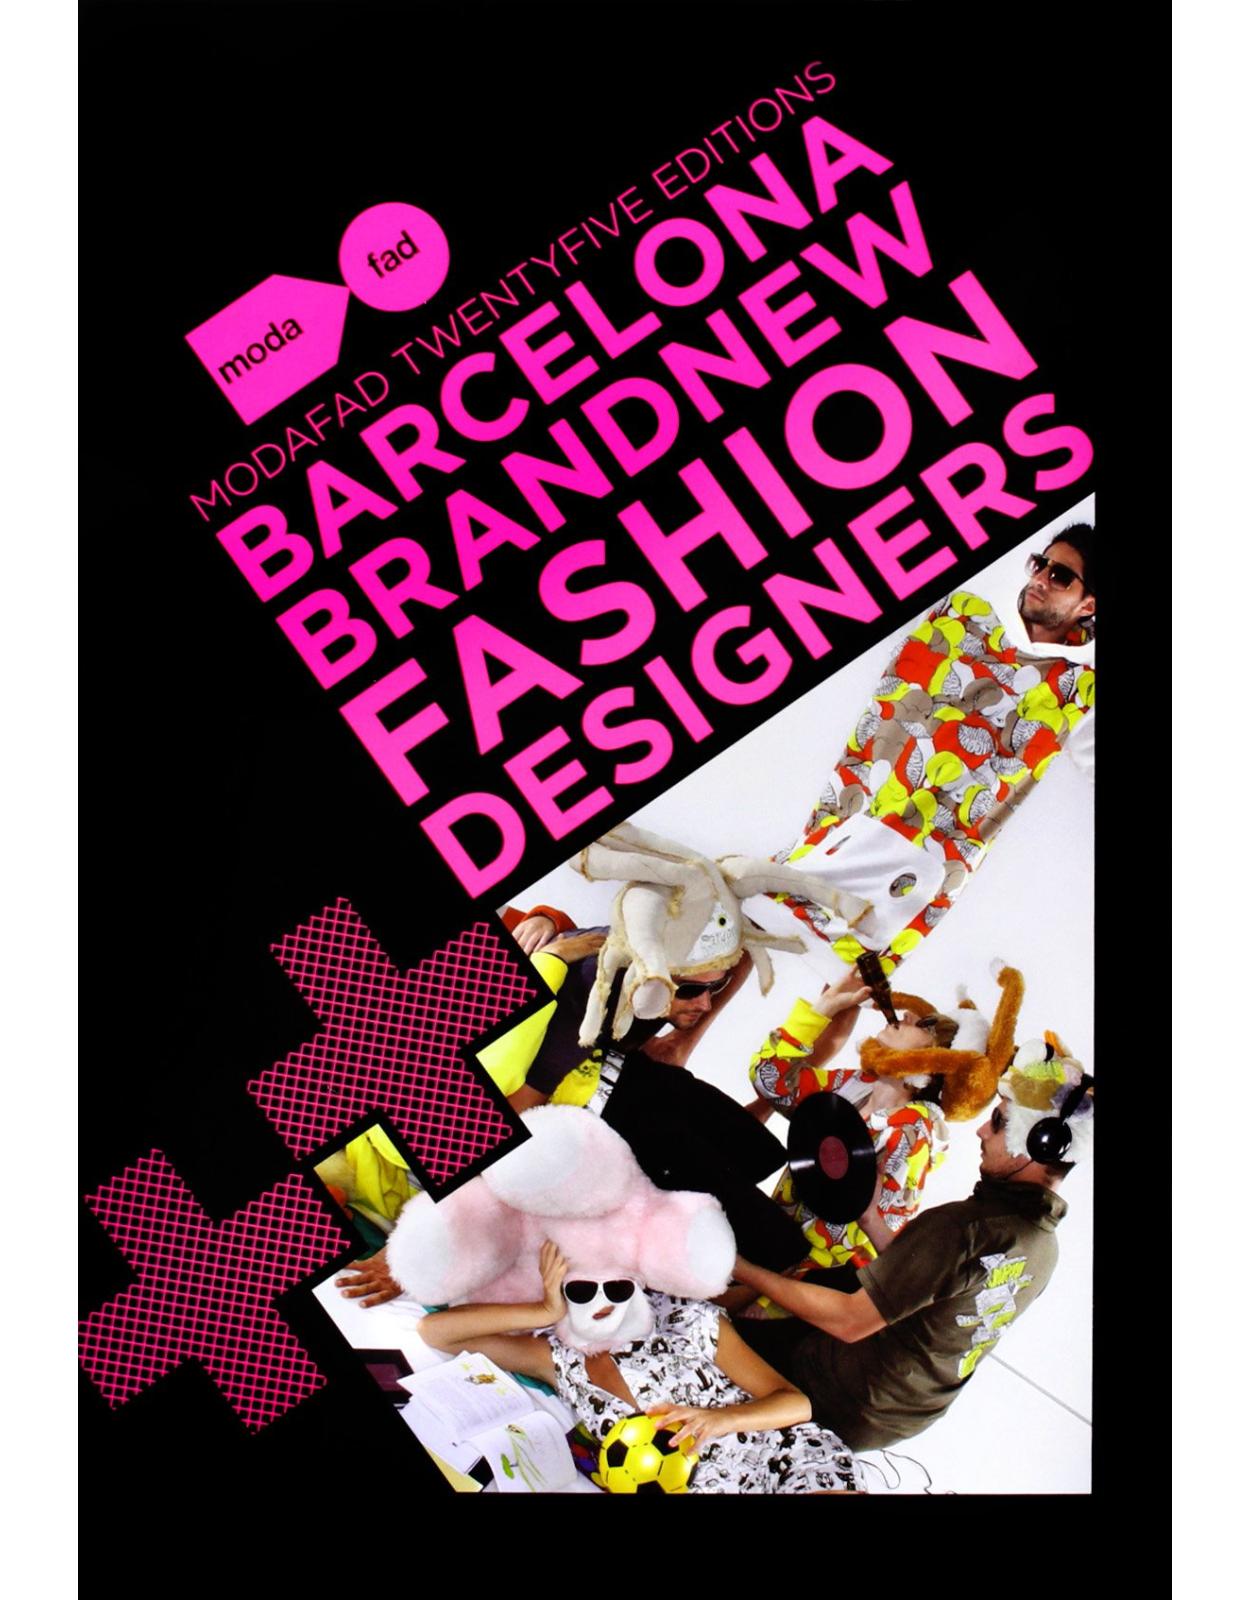 Barcelona Brand New Fashion Designers: Modafad 25 Editions